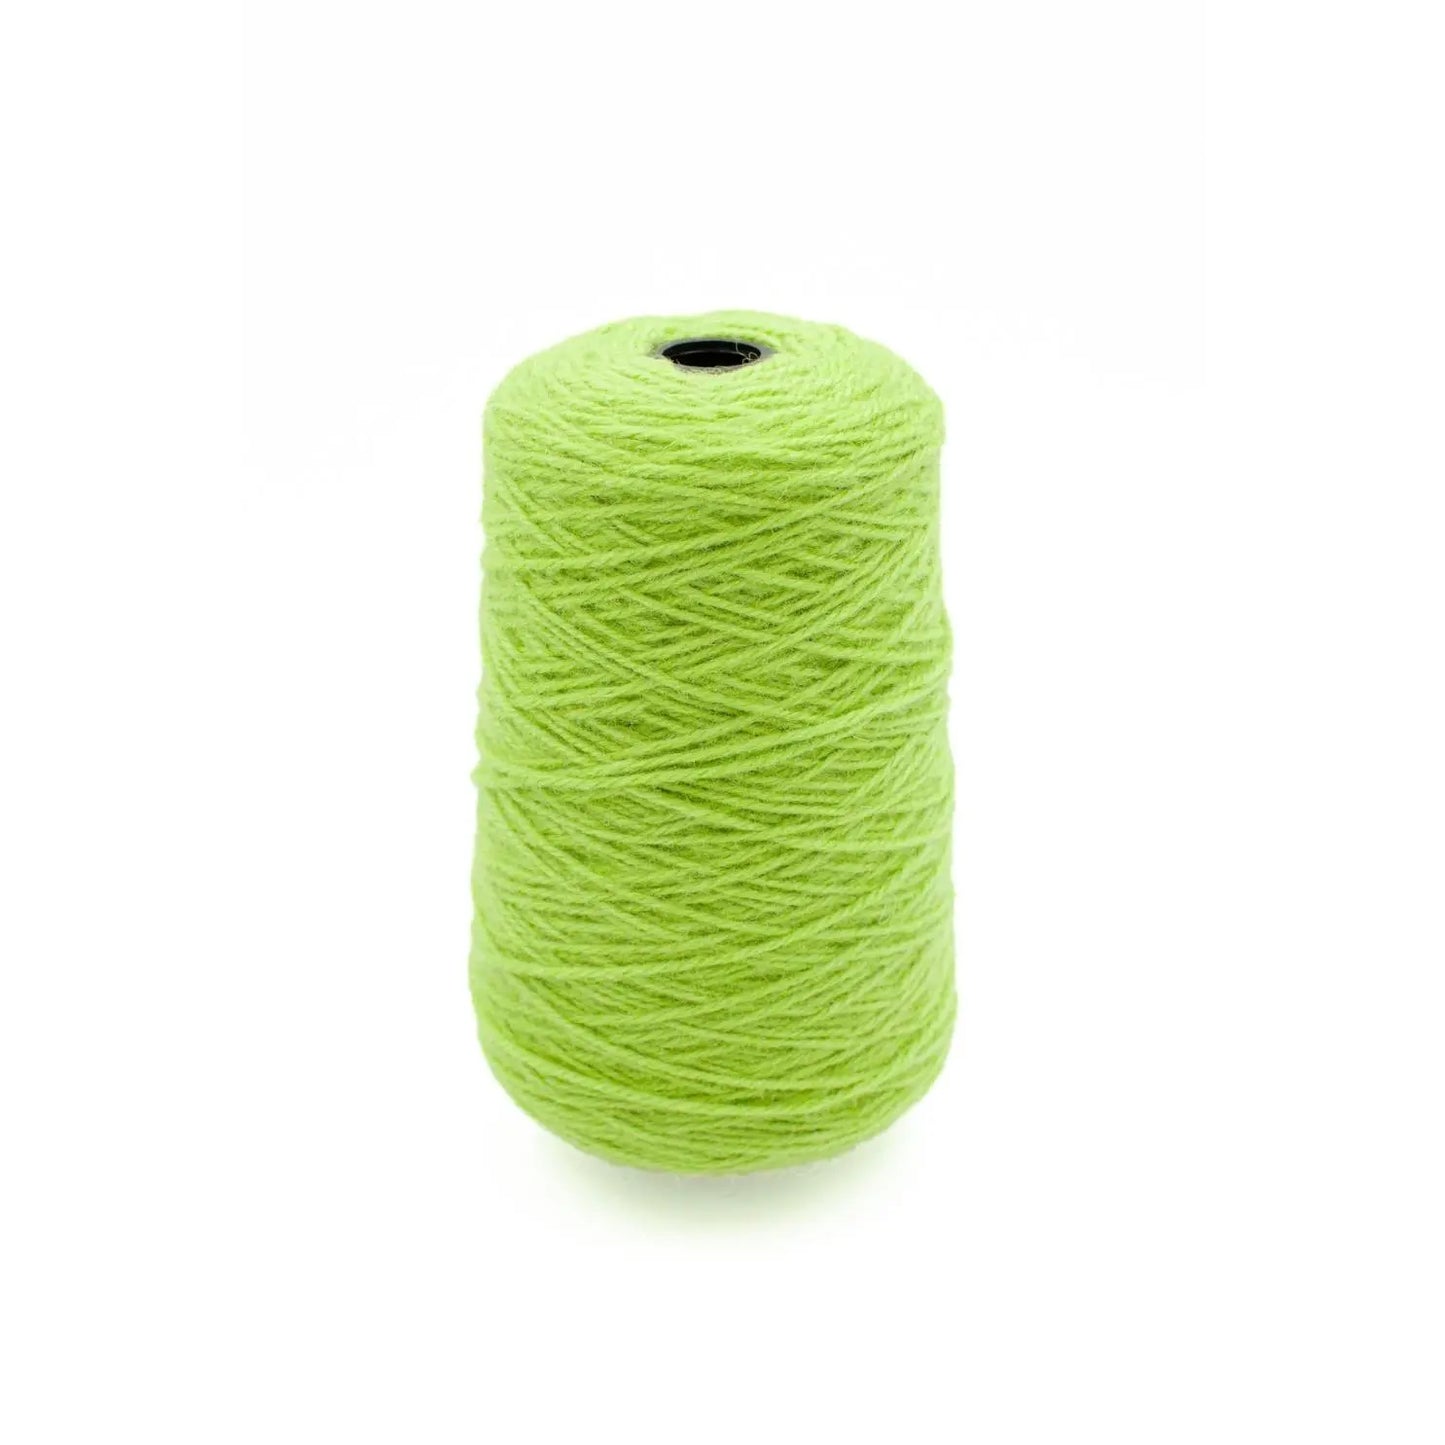 Strong Lime Green Wool Yarn